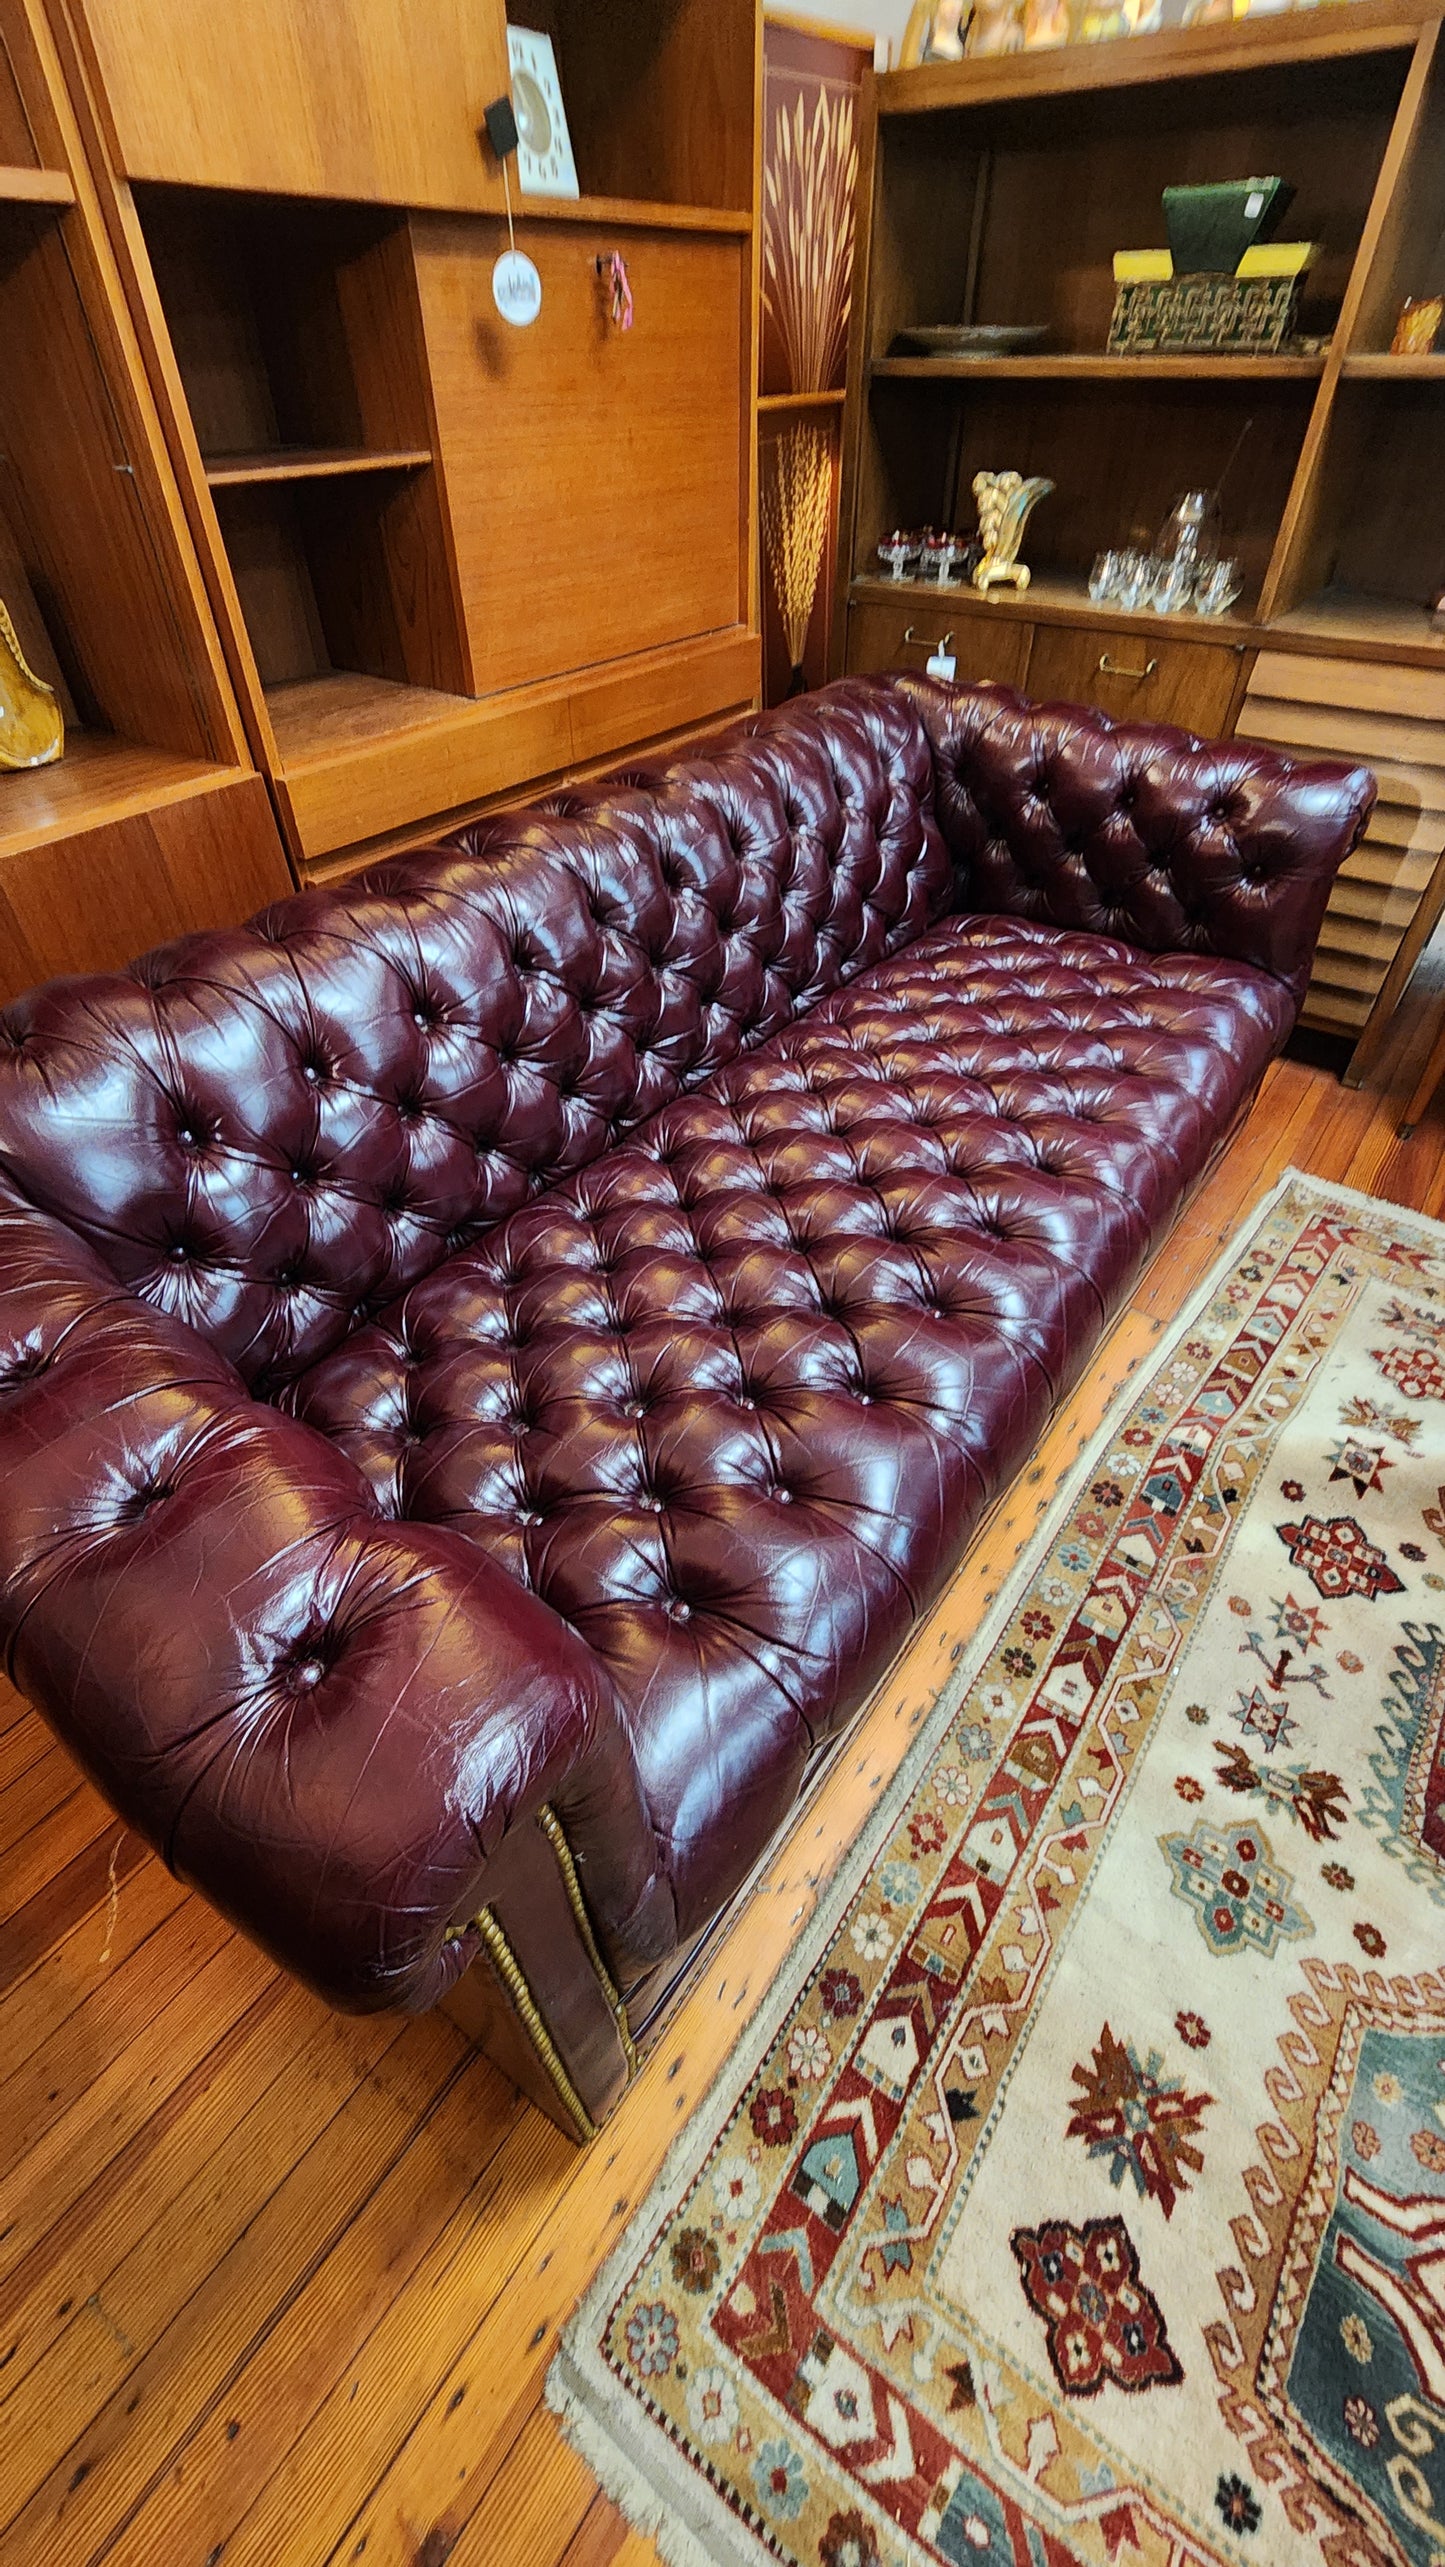 Vintage Chesterfield Sofa in Cognac